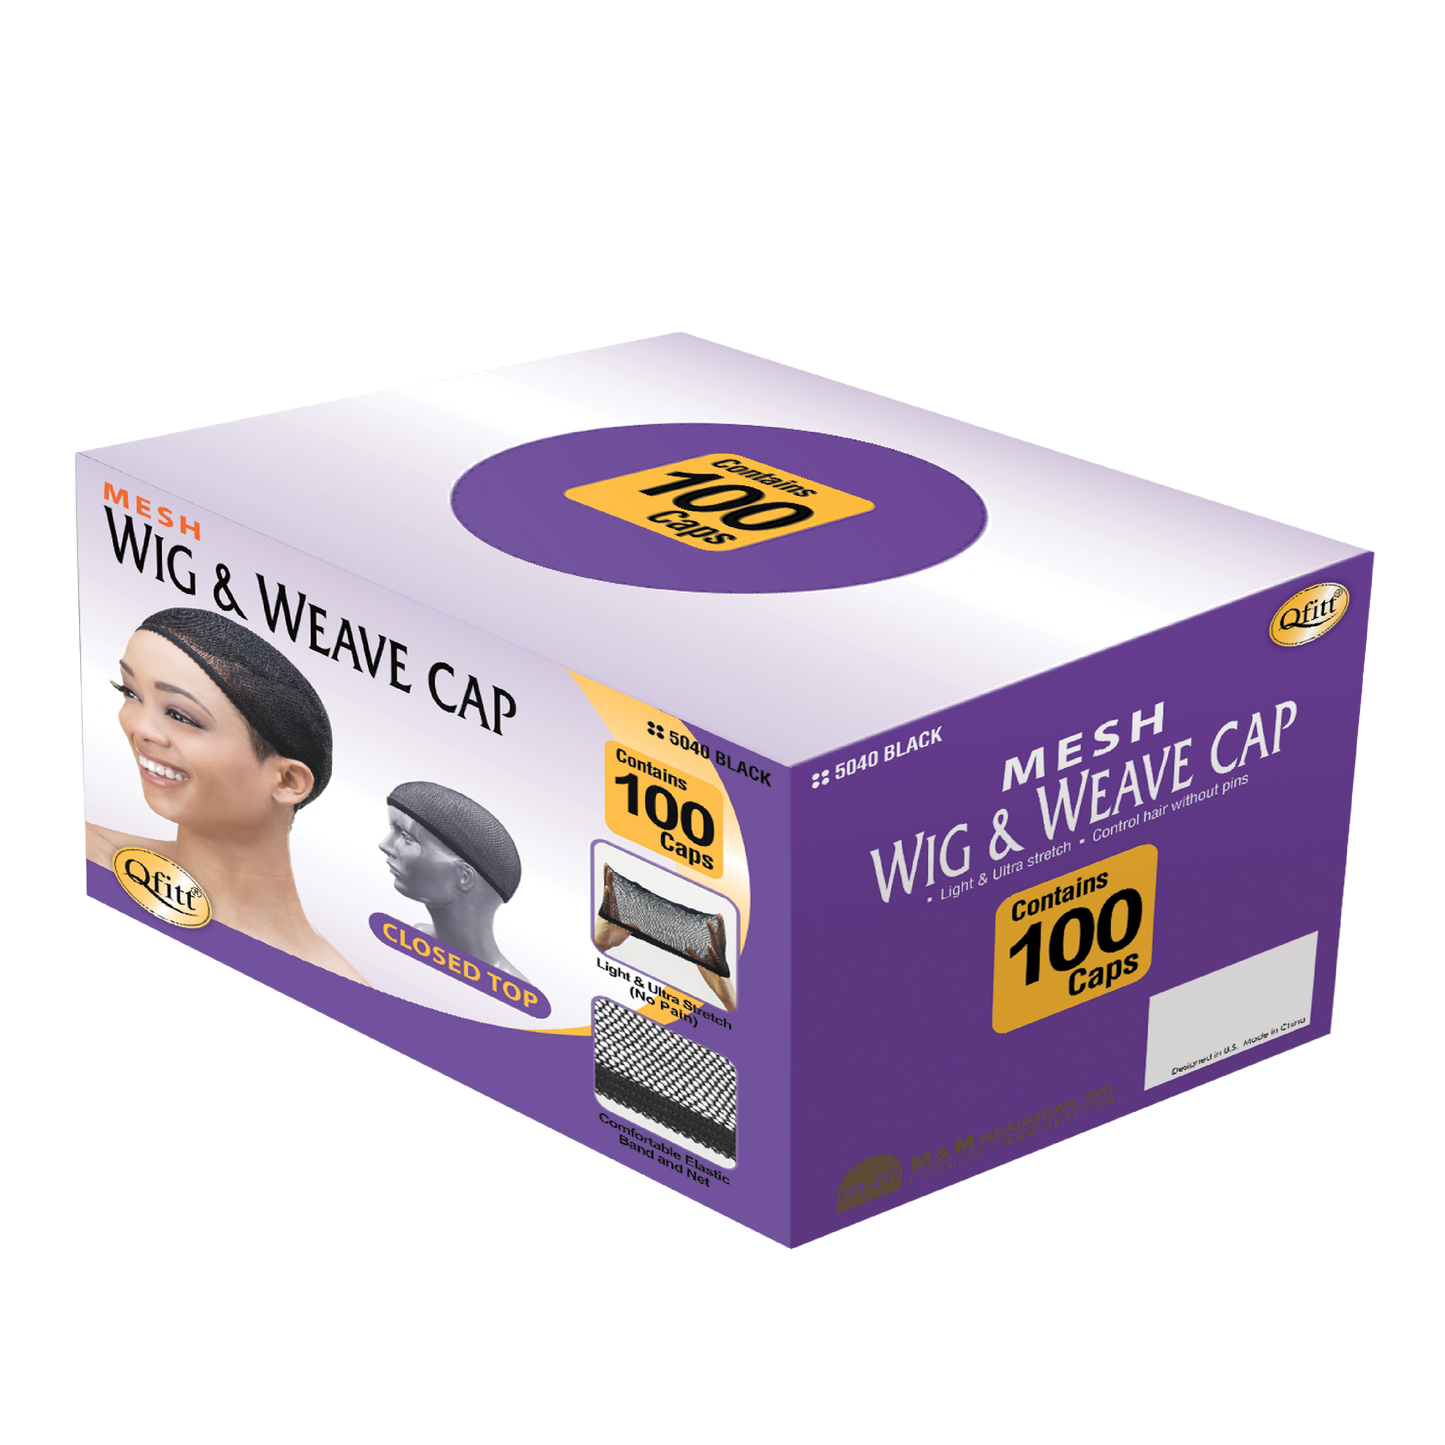 BULK MESH WIG & WEAVE CAP - 100CAPS – Qfitt